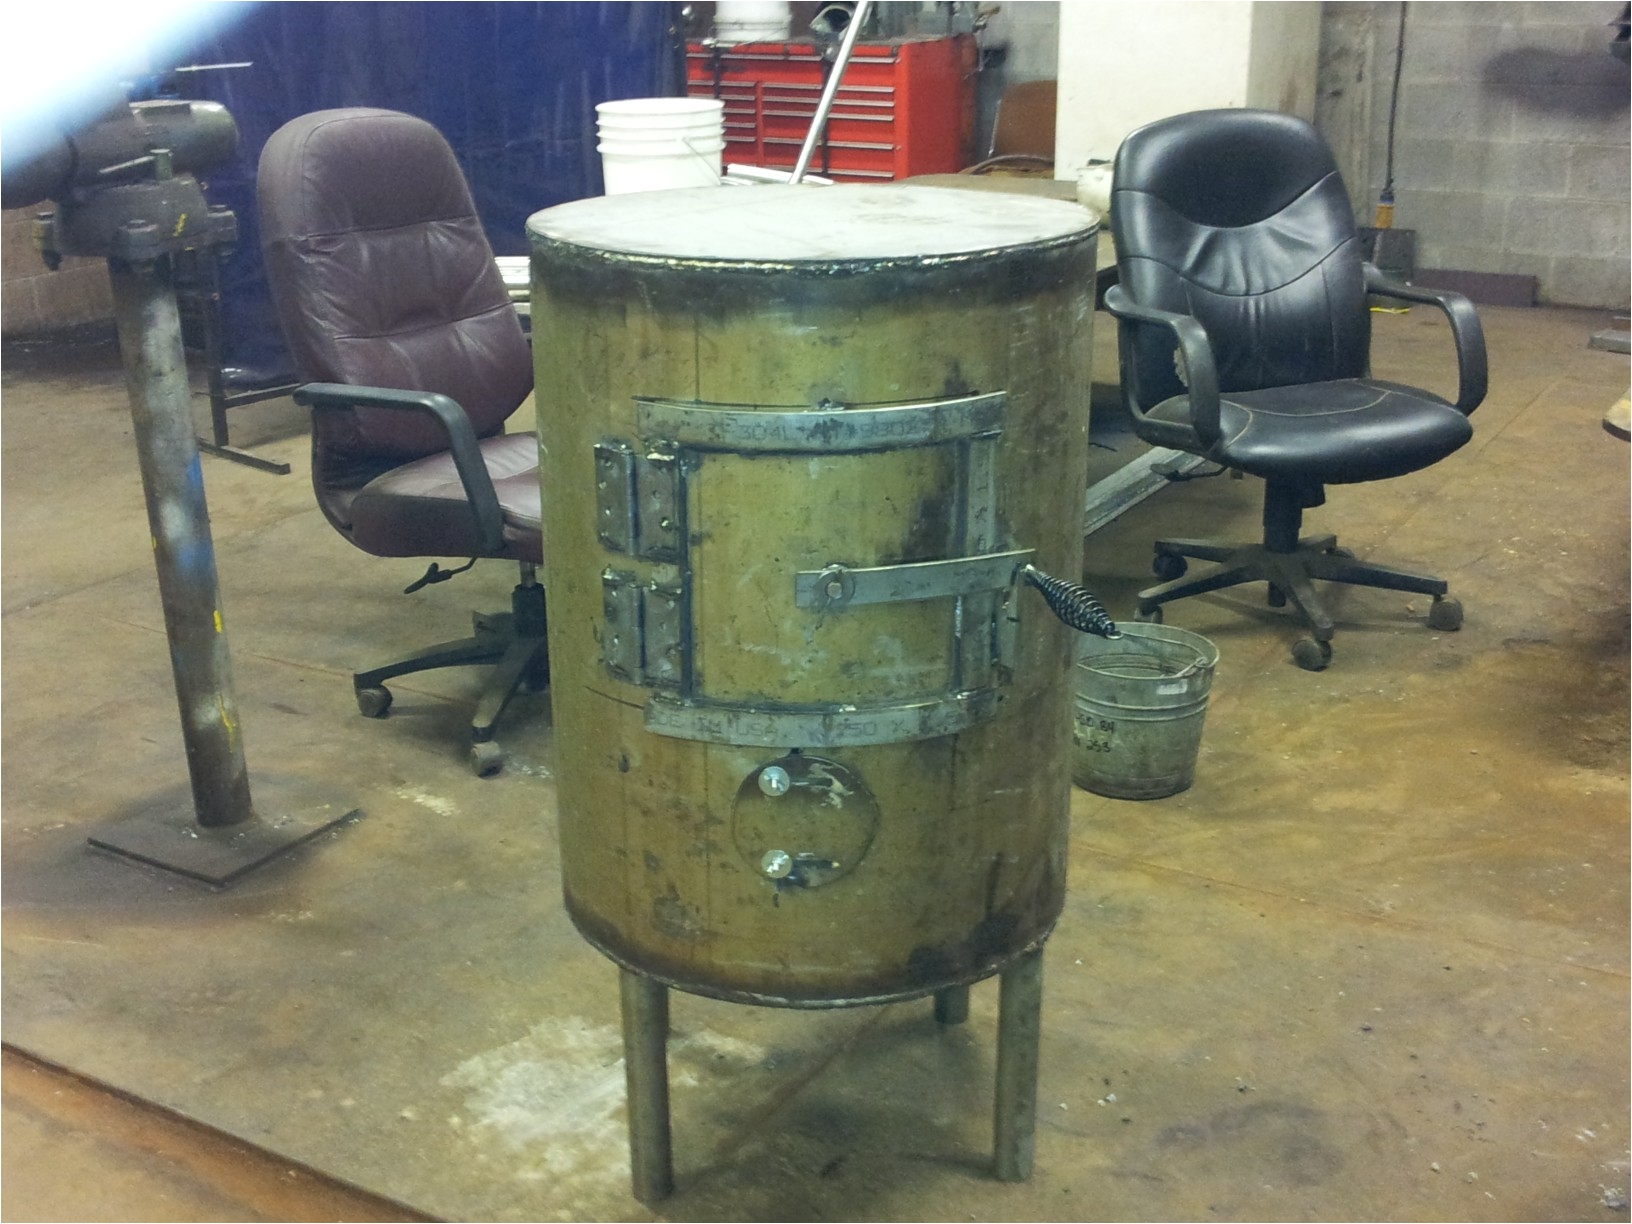 55 gallon drum fireplace kit fireplace ideas